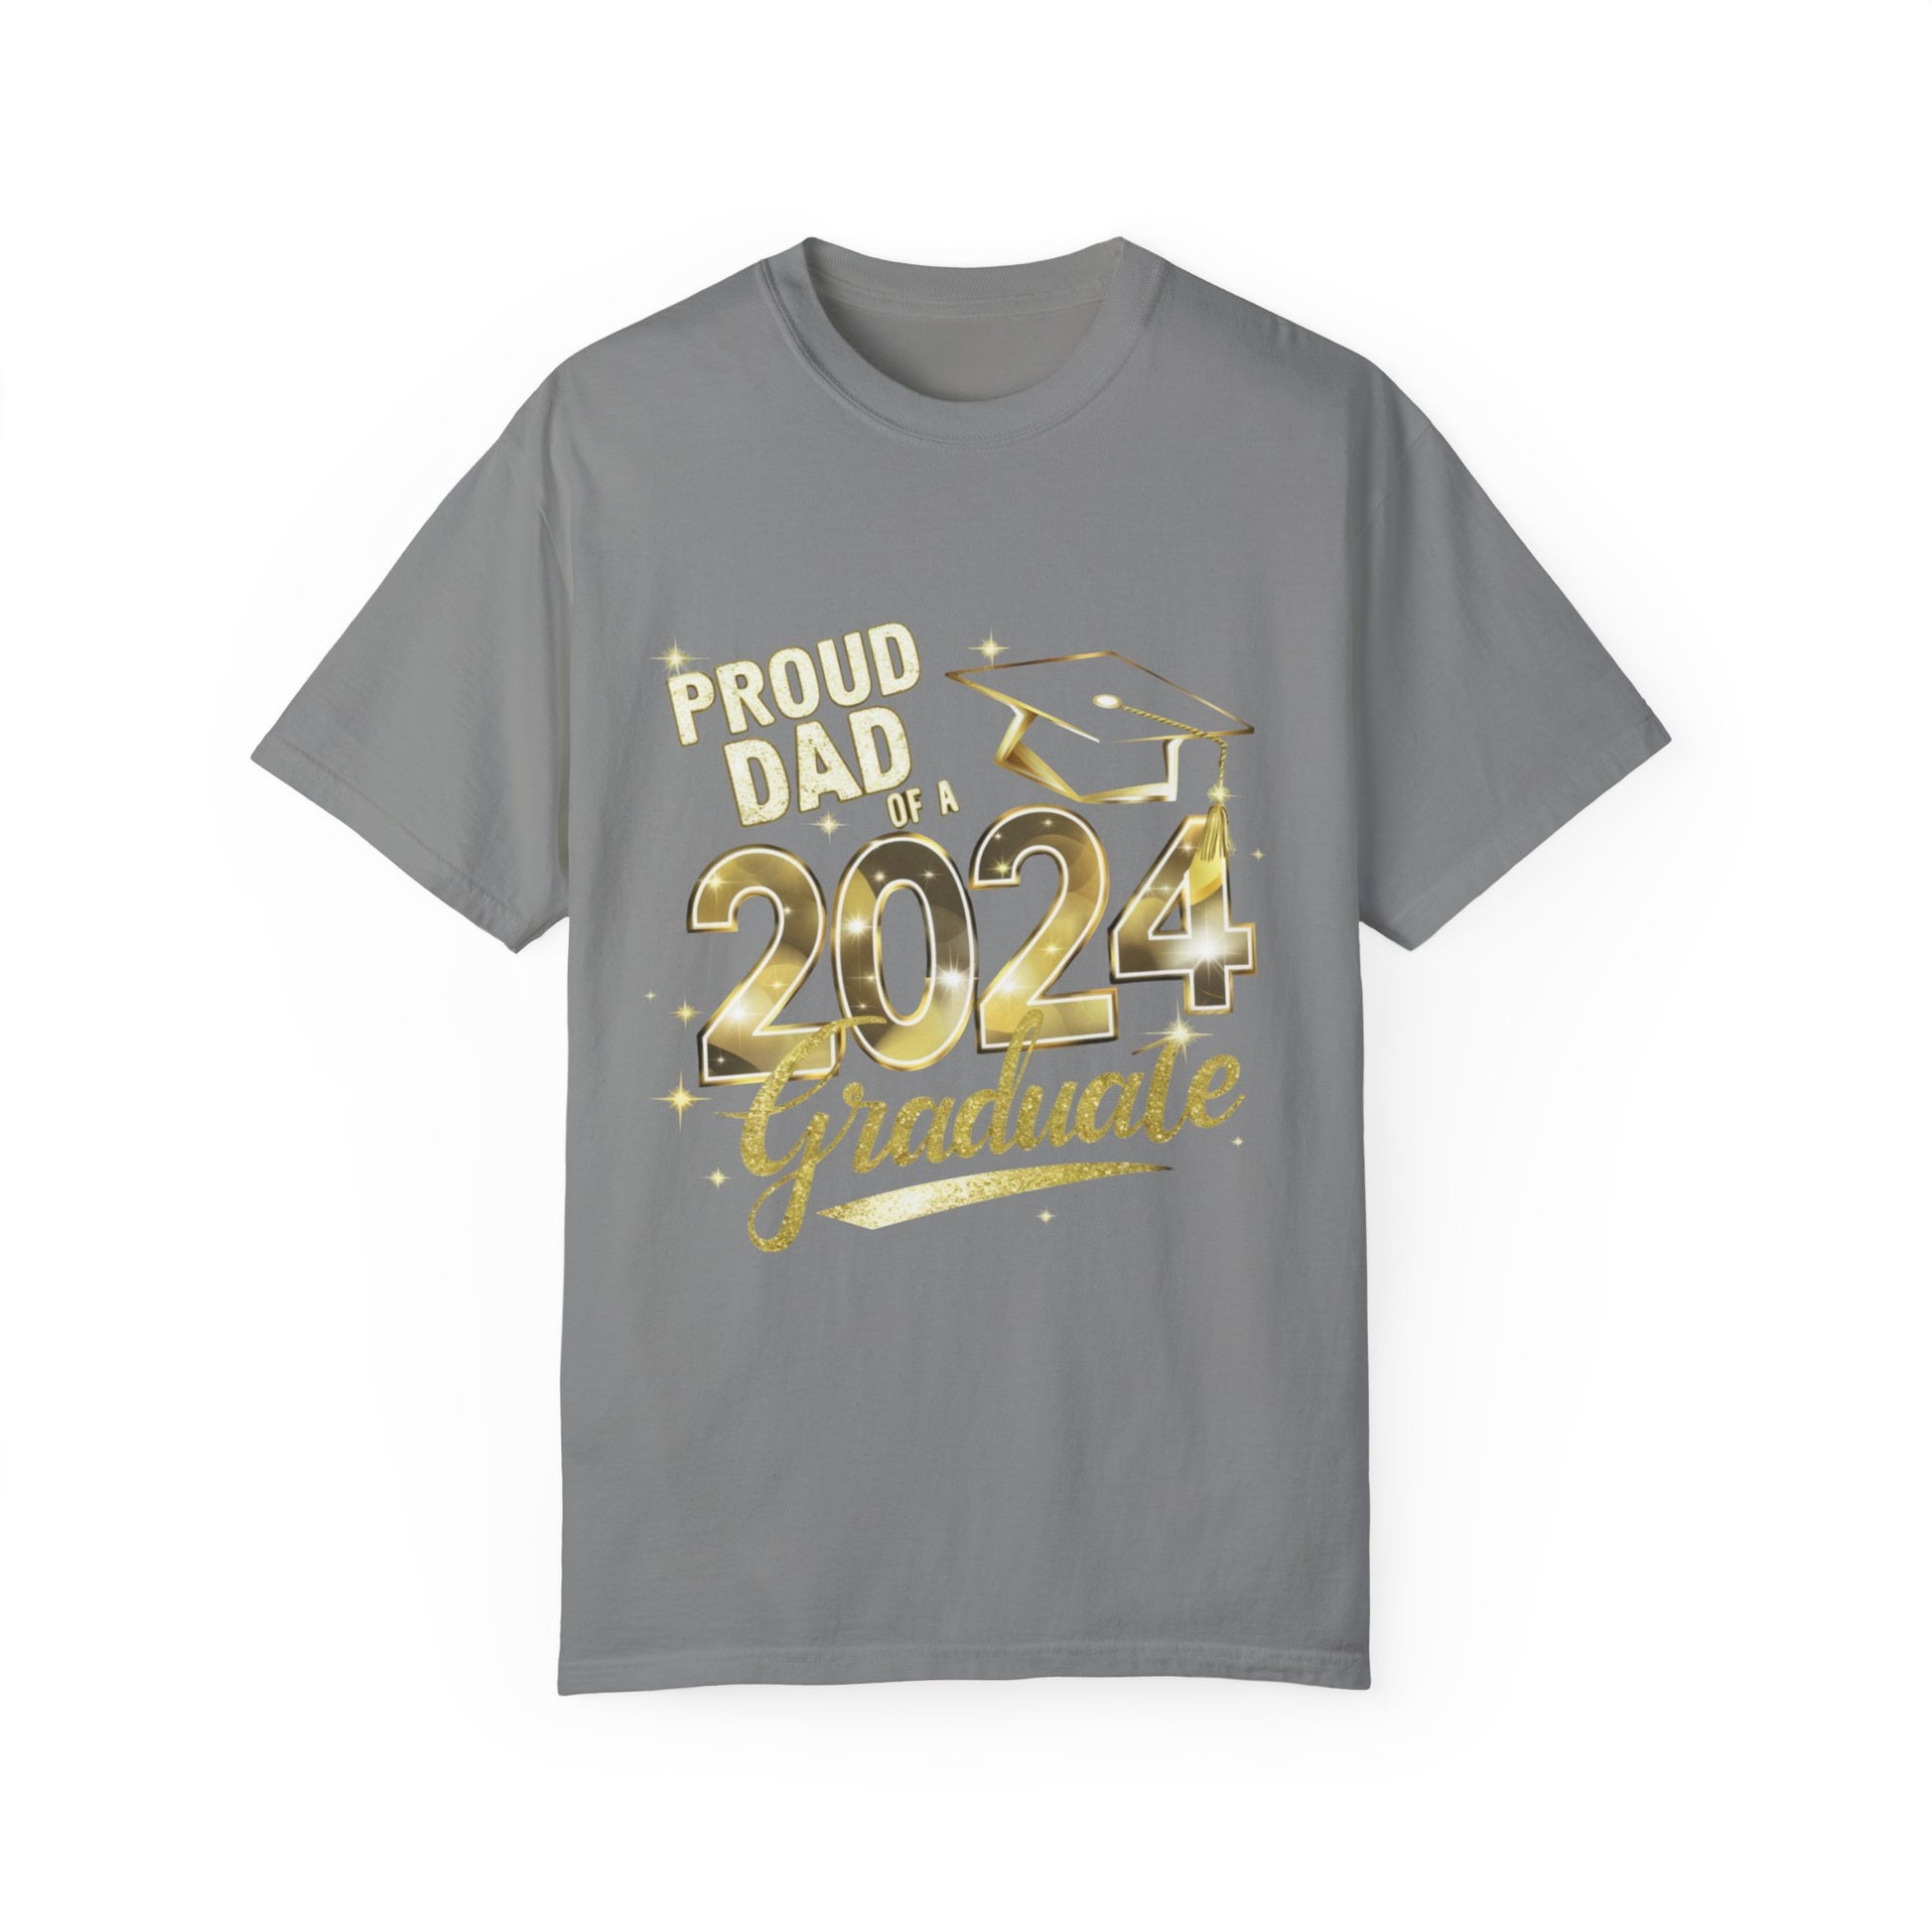 Proud of Dad 2024 Graduate Unisex Garment-dyed T-shirt Cotton Funny Humorous Graphic Soft Premium Unisex Men Women Granite T-shirt Birthday Gift-4